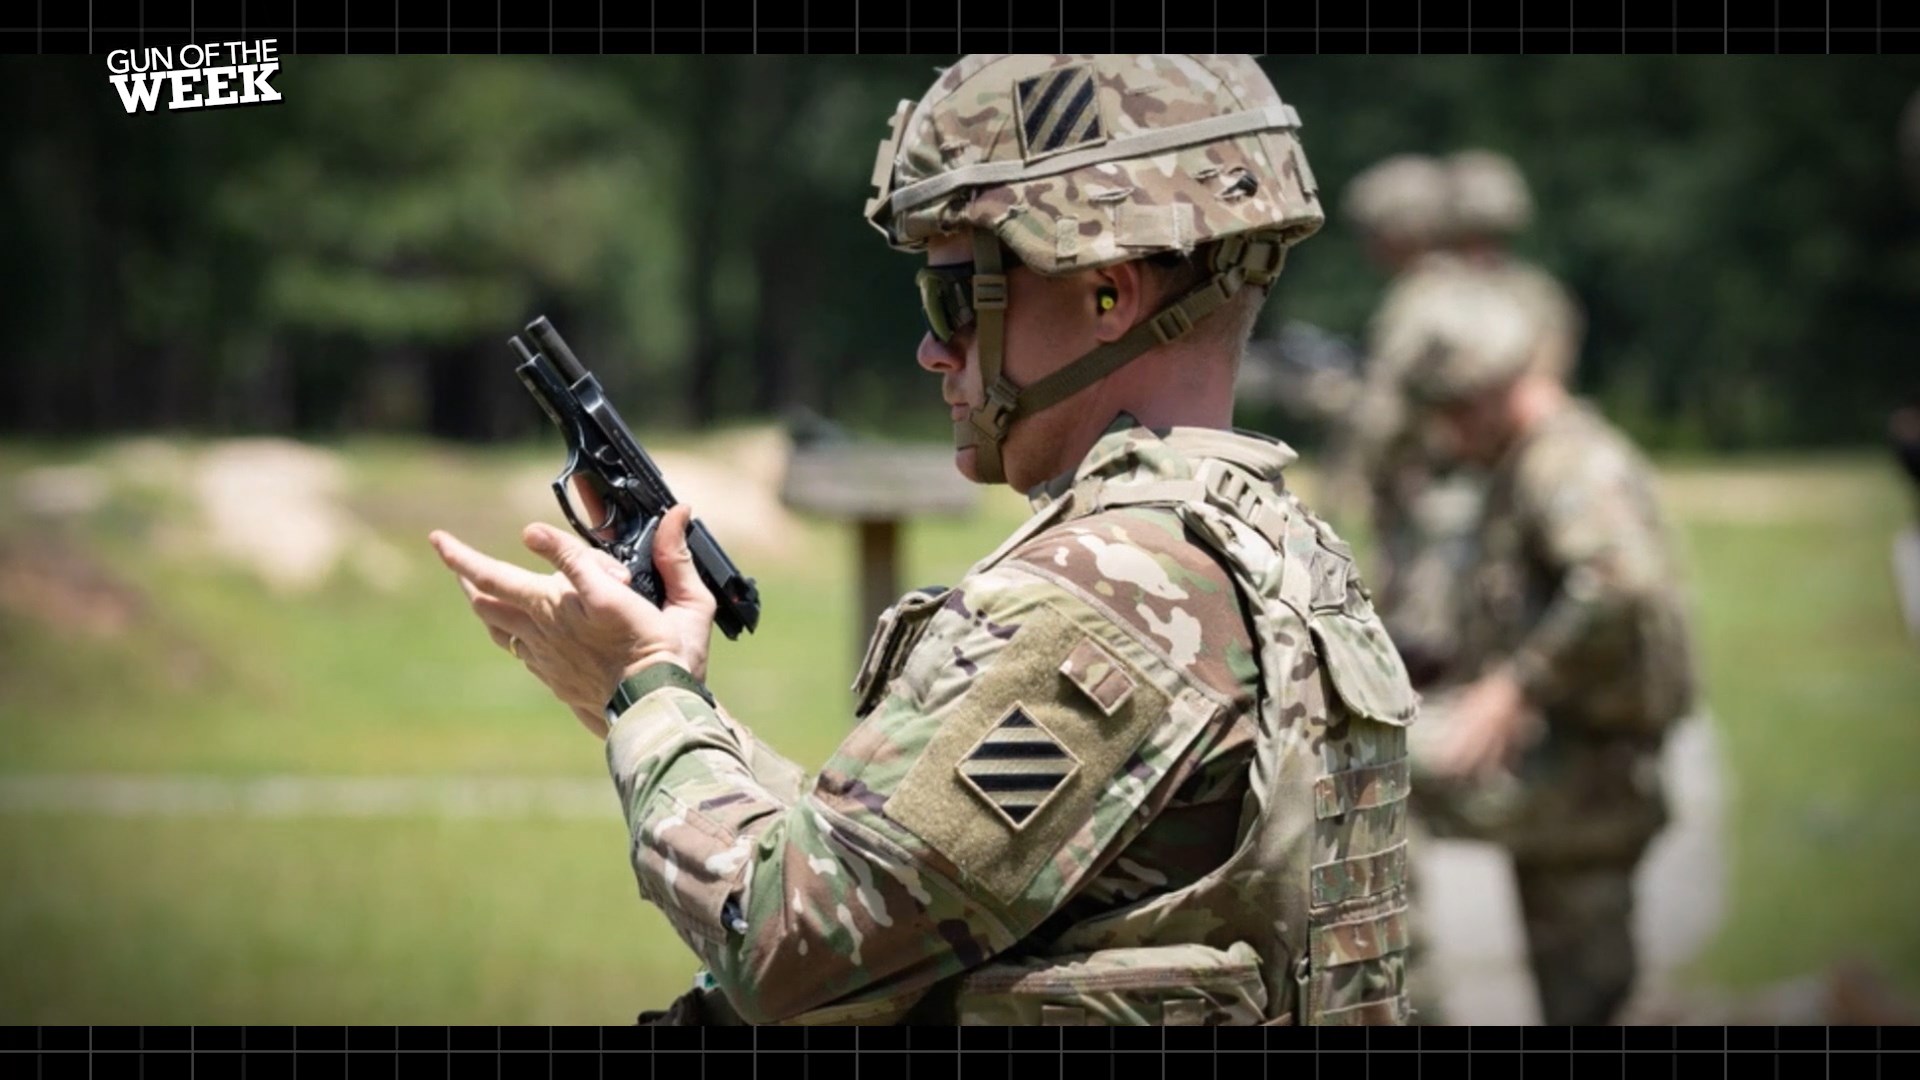 Soldier in full gear camo helmet gun testing handgun outdoors GUN OF THE WEEK text on image